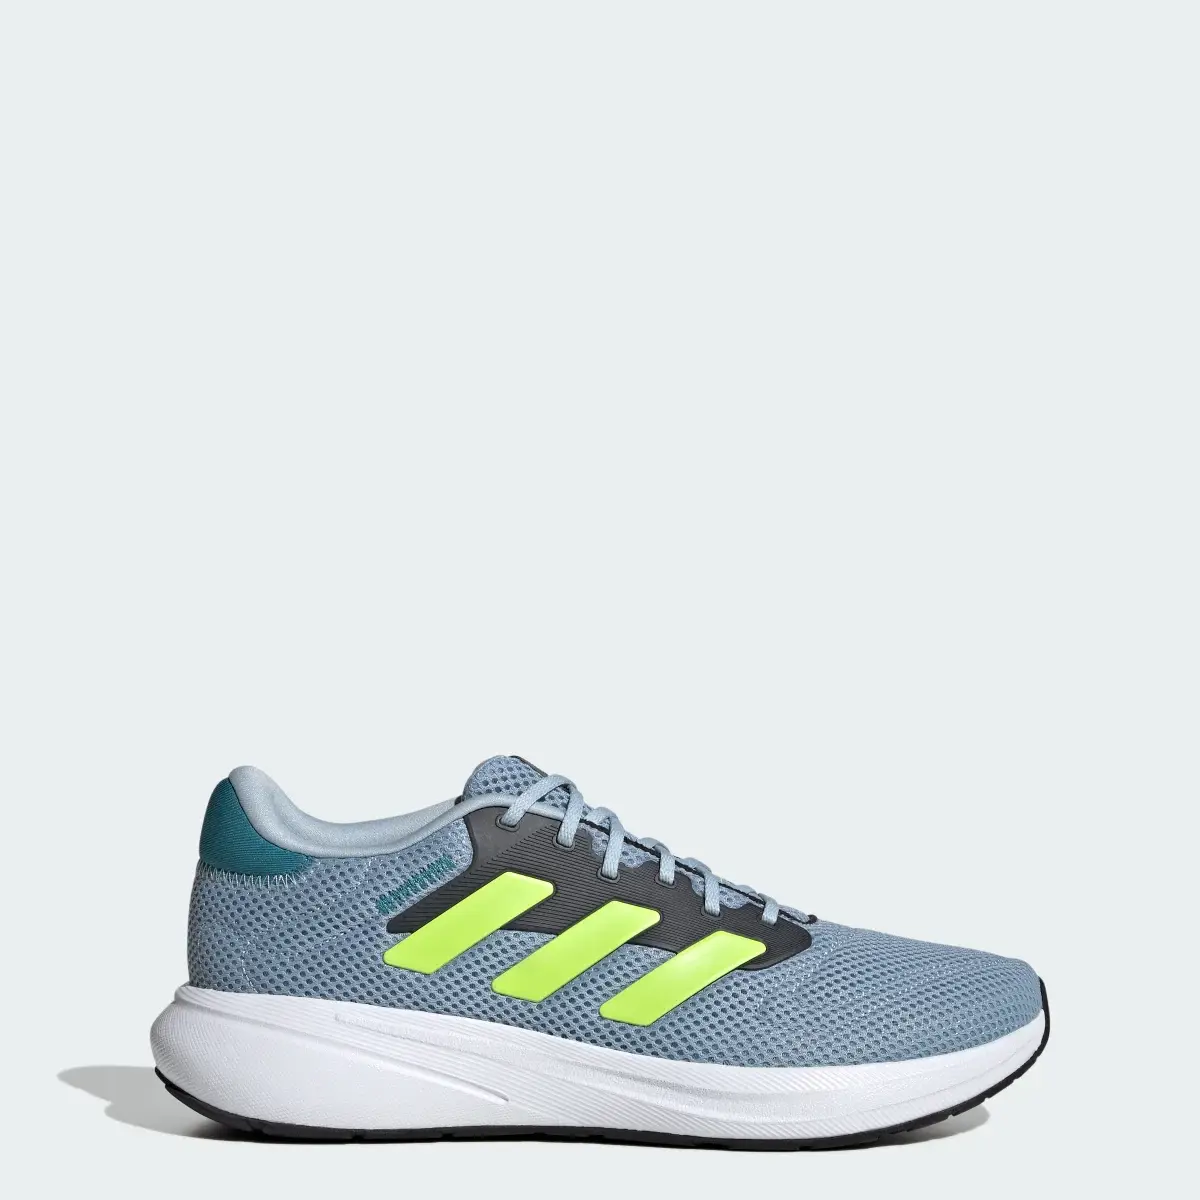 Adidas Response Runner Shoes. 1